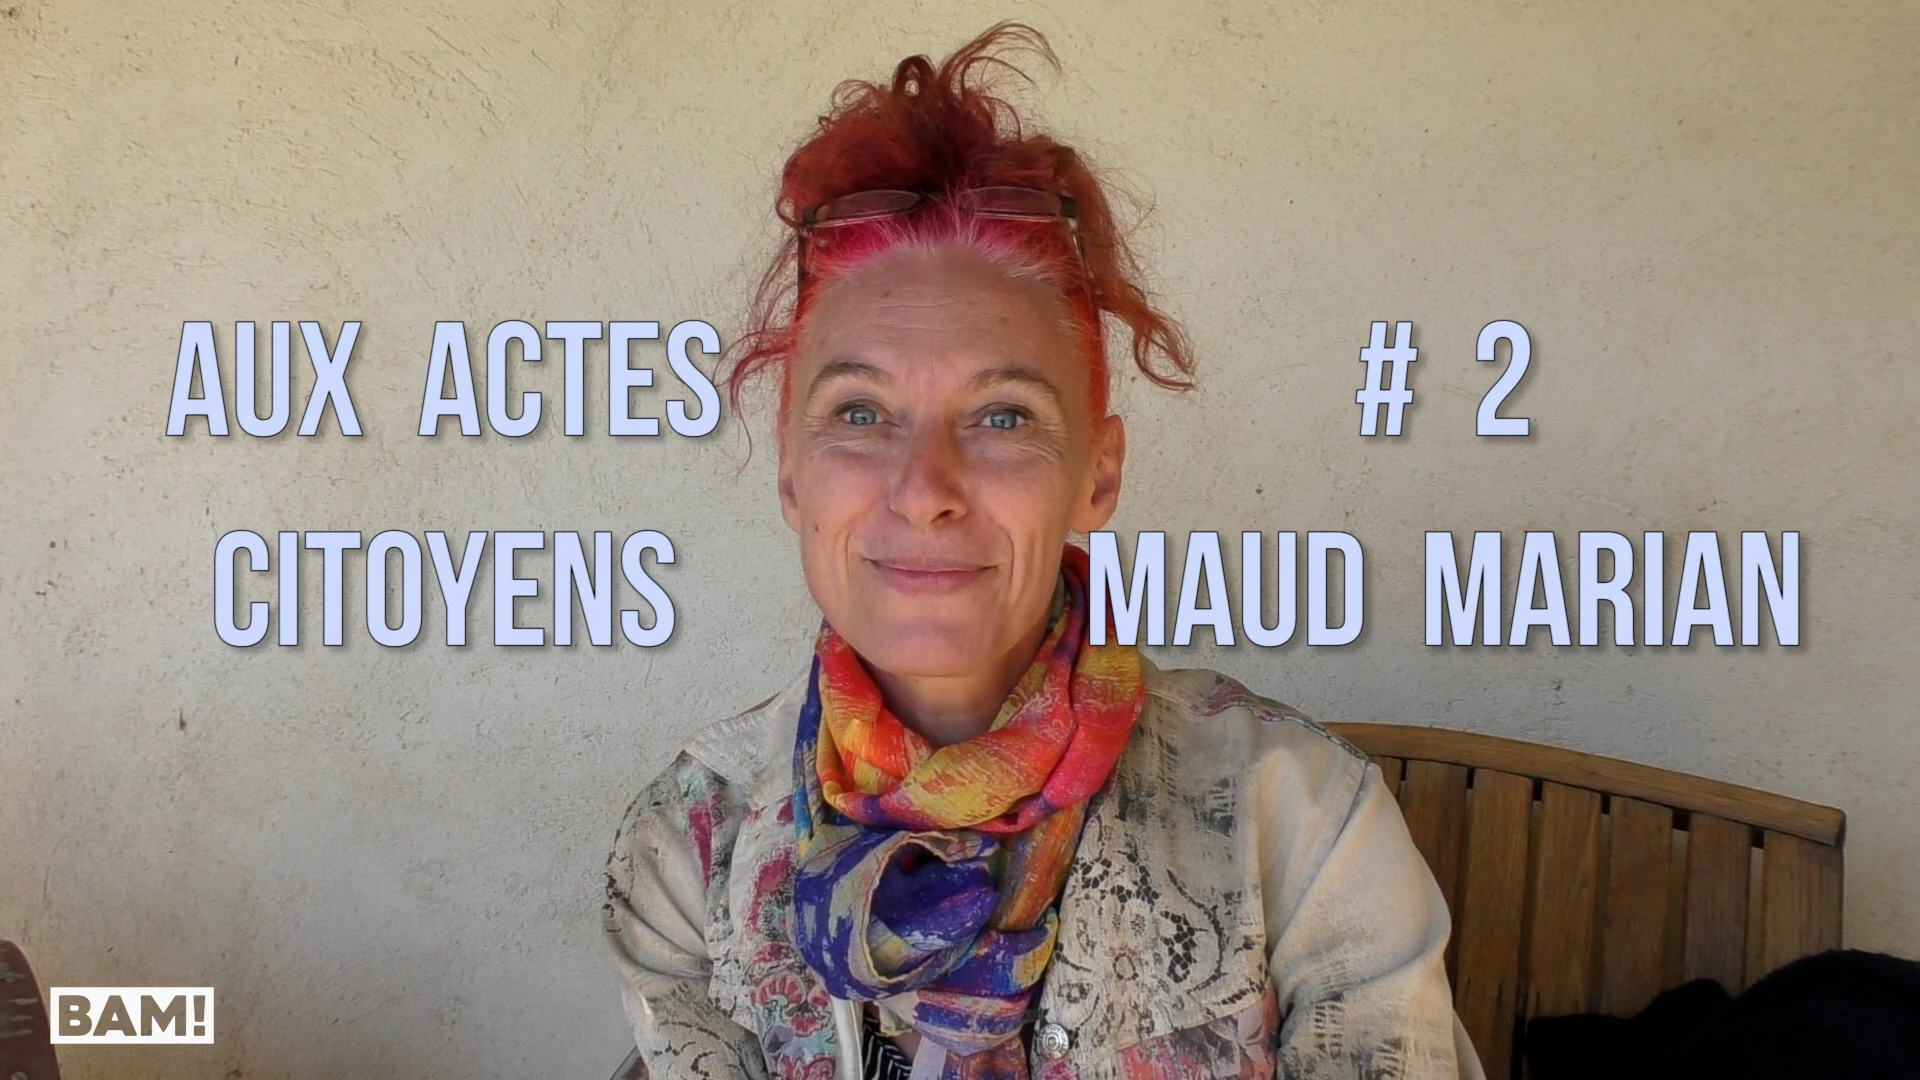 AUX ACTES CITOYENS # 2 MAUD MARIAN